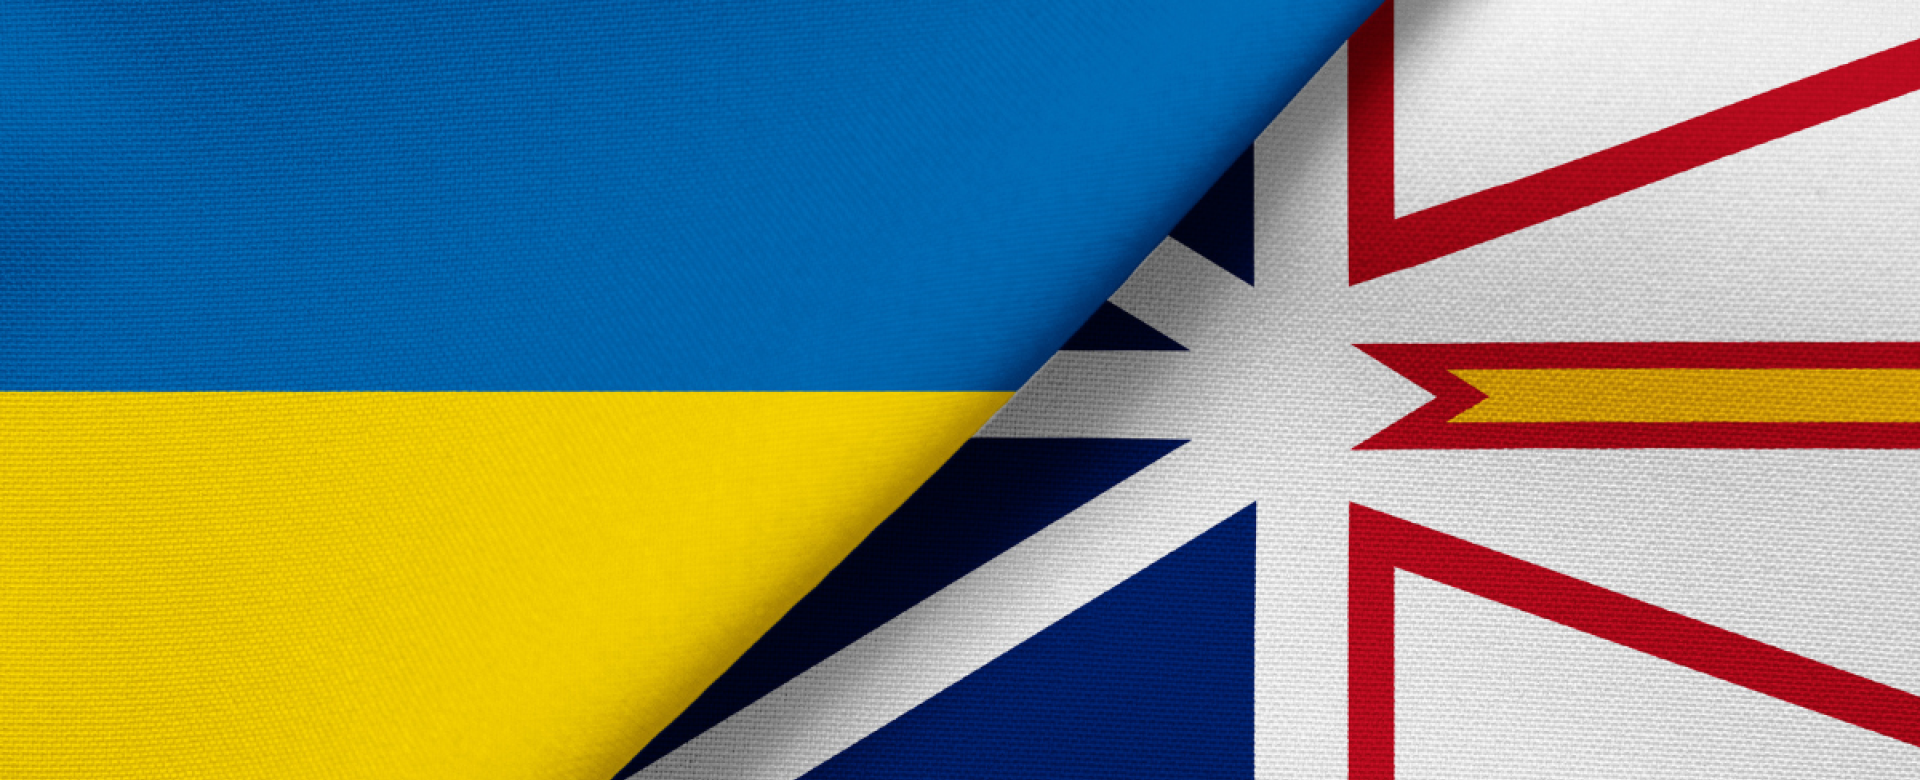 Ukrainian and NL Flags